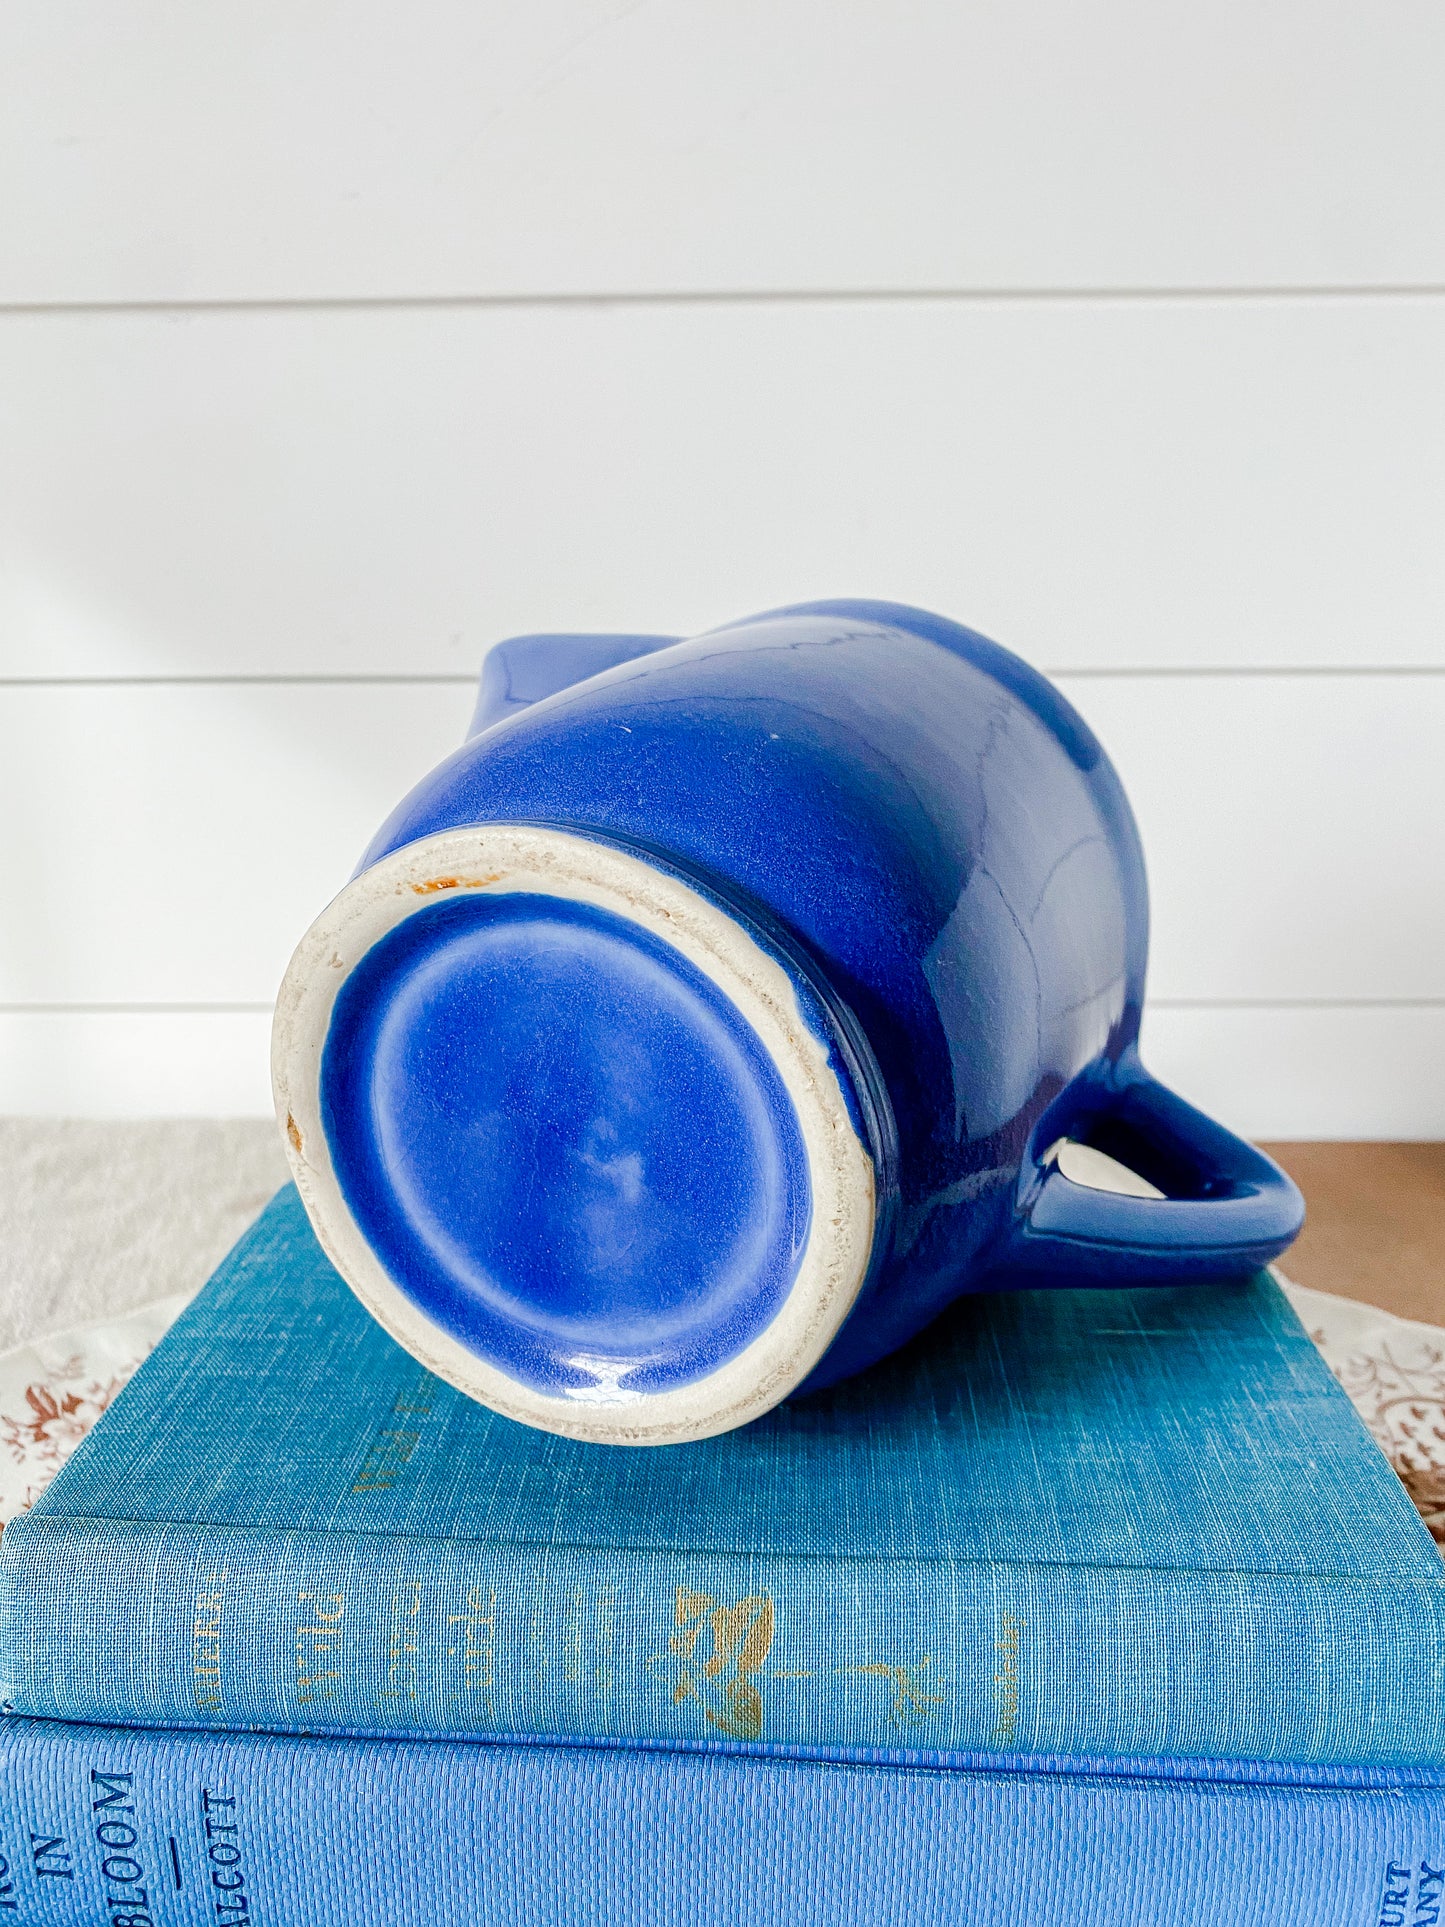 Vintage Blue Sevilla Stoneware Pitcher by Cameron Clay, c1930s-1950s Farmhouse Kitchen